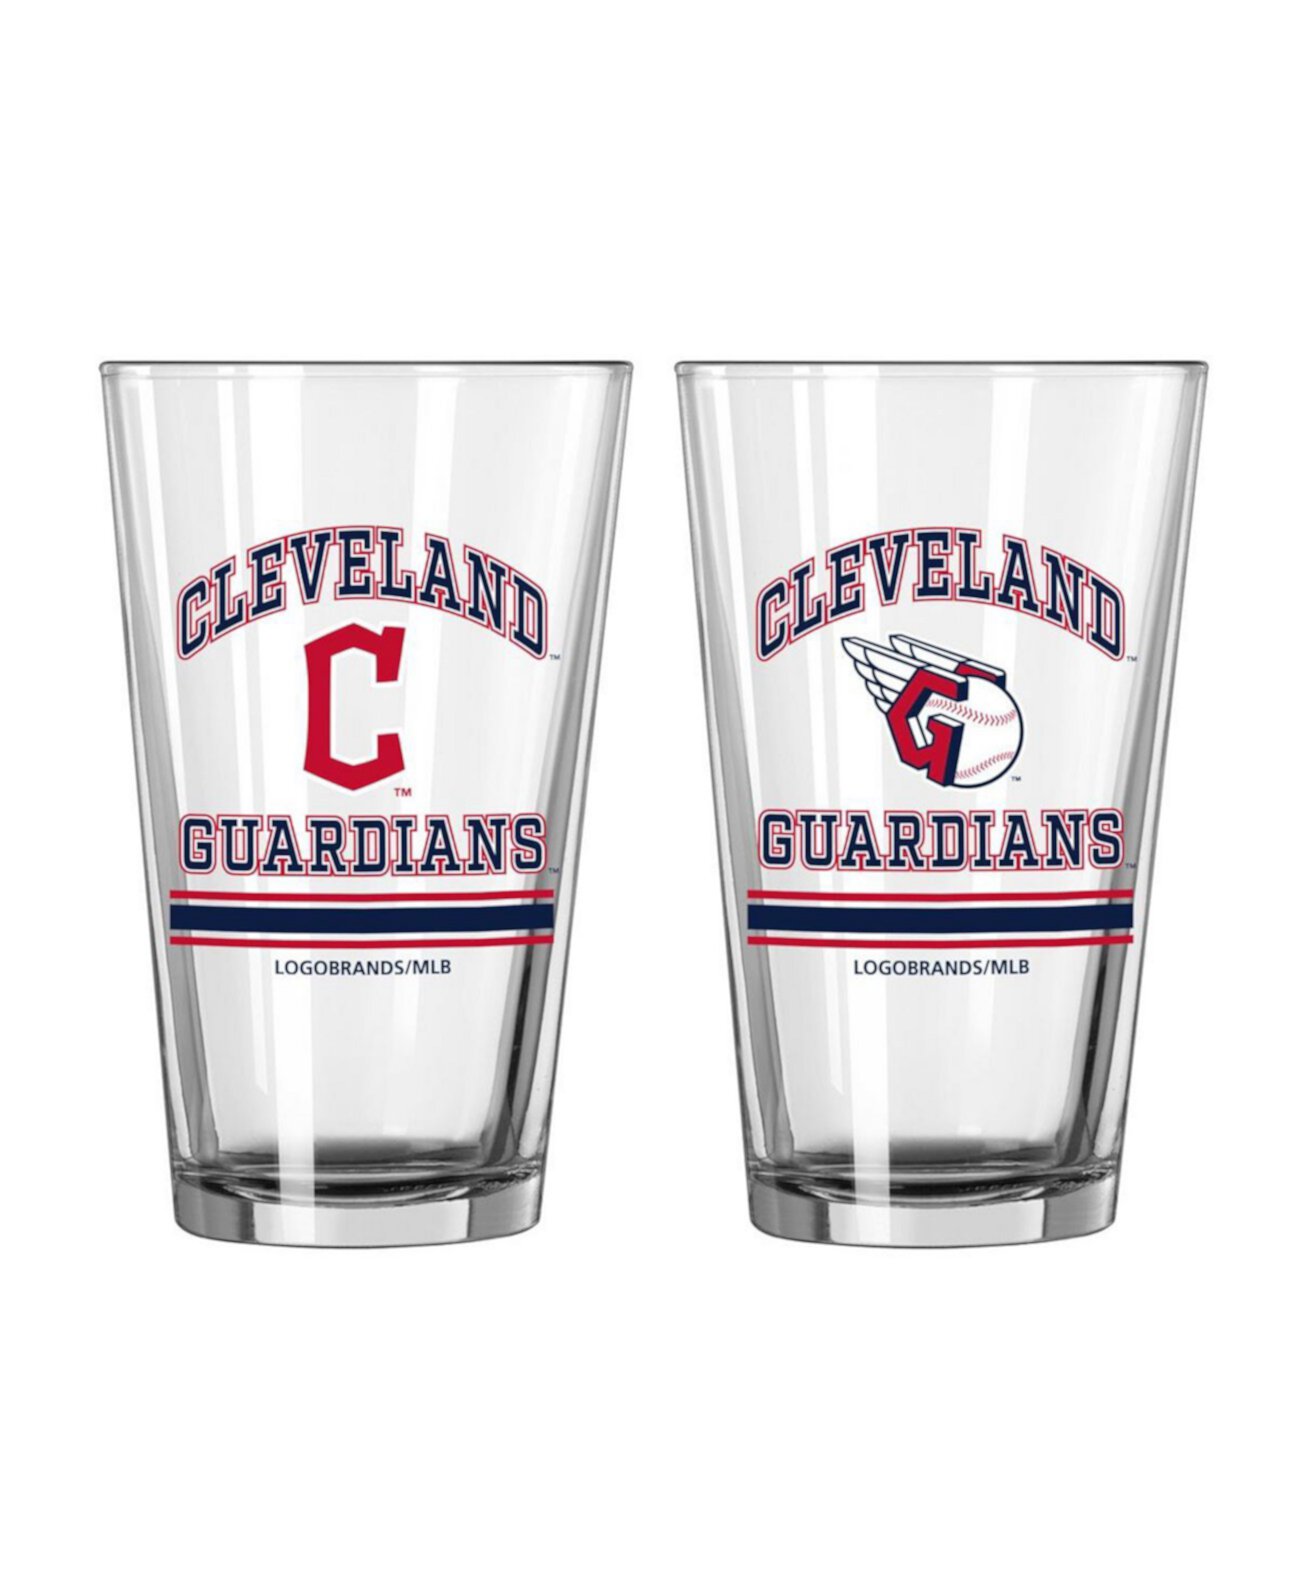 Cleveland Guardians, упаковка из двух стаканов, 16 унций, пинта Logo Brand